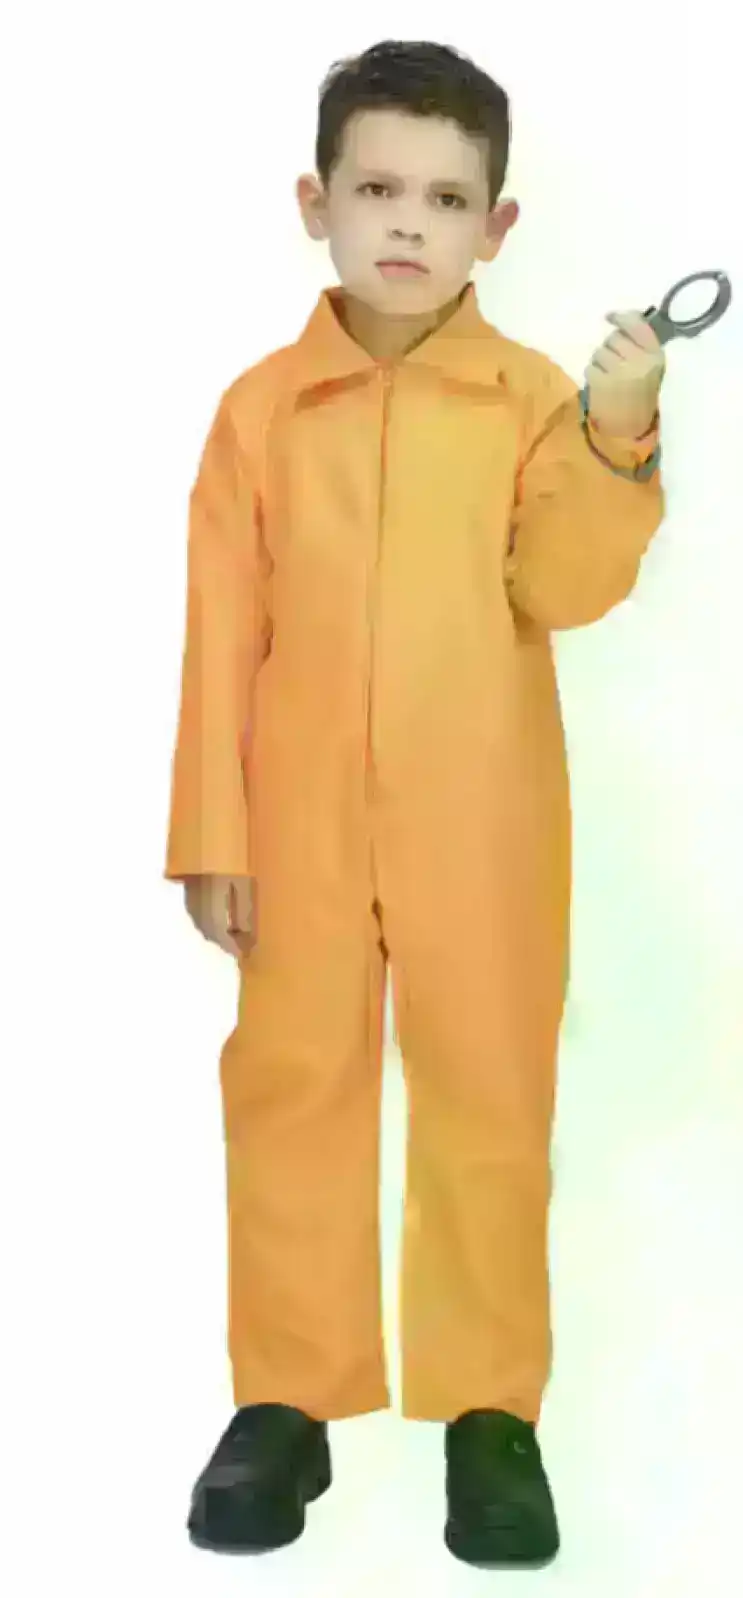 Kids Prisoner Boy Costume Halloween Convict Jail Kids Outfit Childrens - Orange